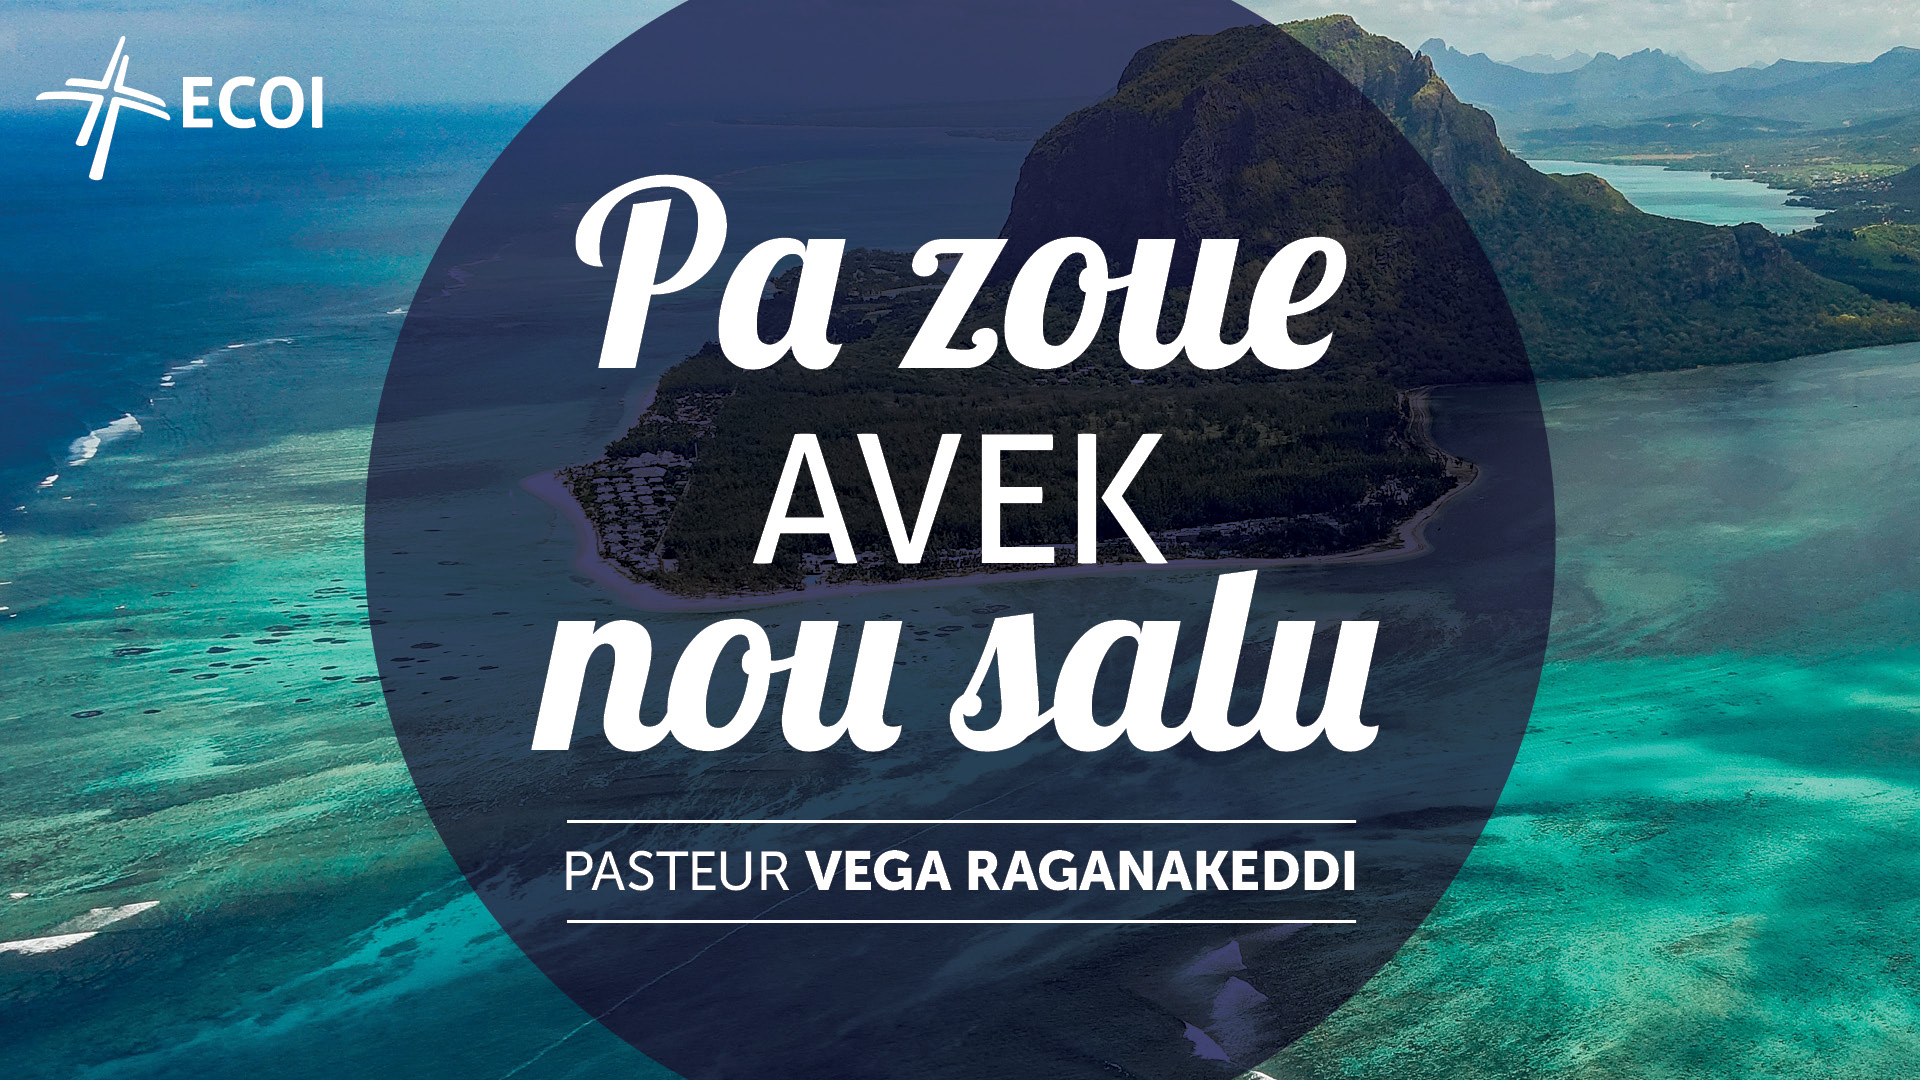 Featured image for “Pa zoue avek nou salu”